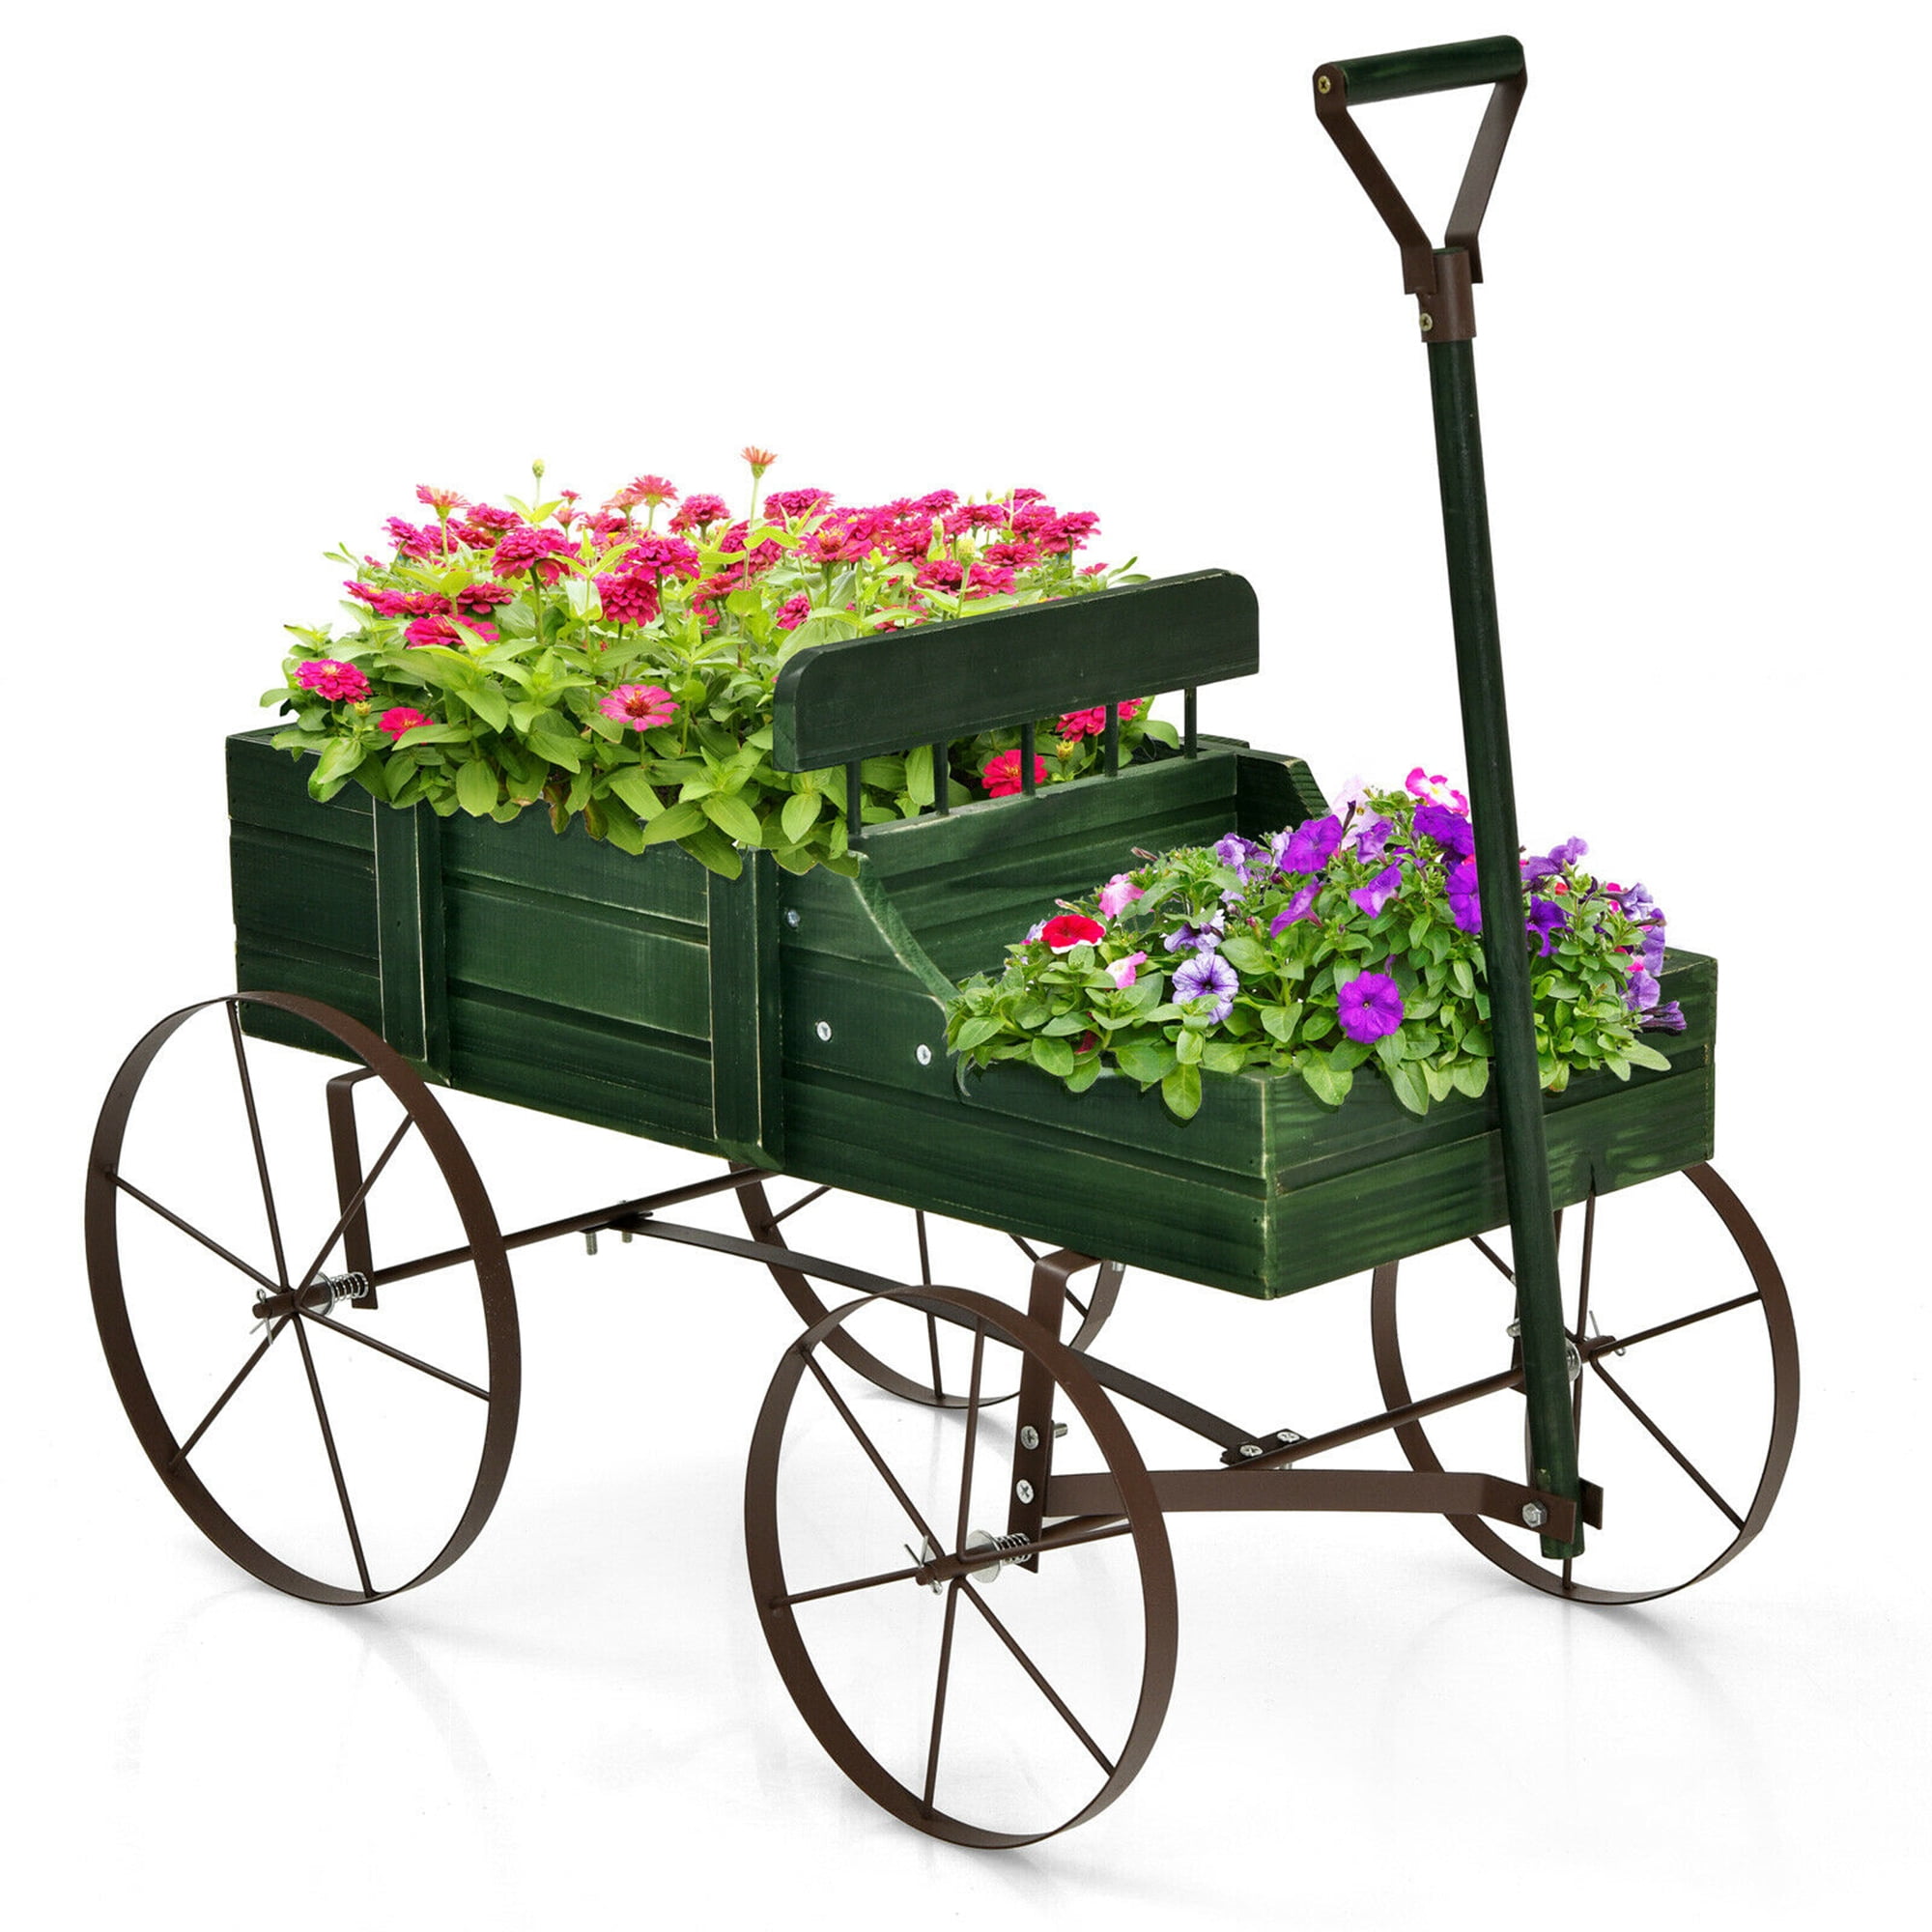 Rustic Country Barrel Wagon Flower Planter Plant Pot Stand Garden Yard Decor 